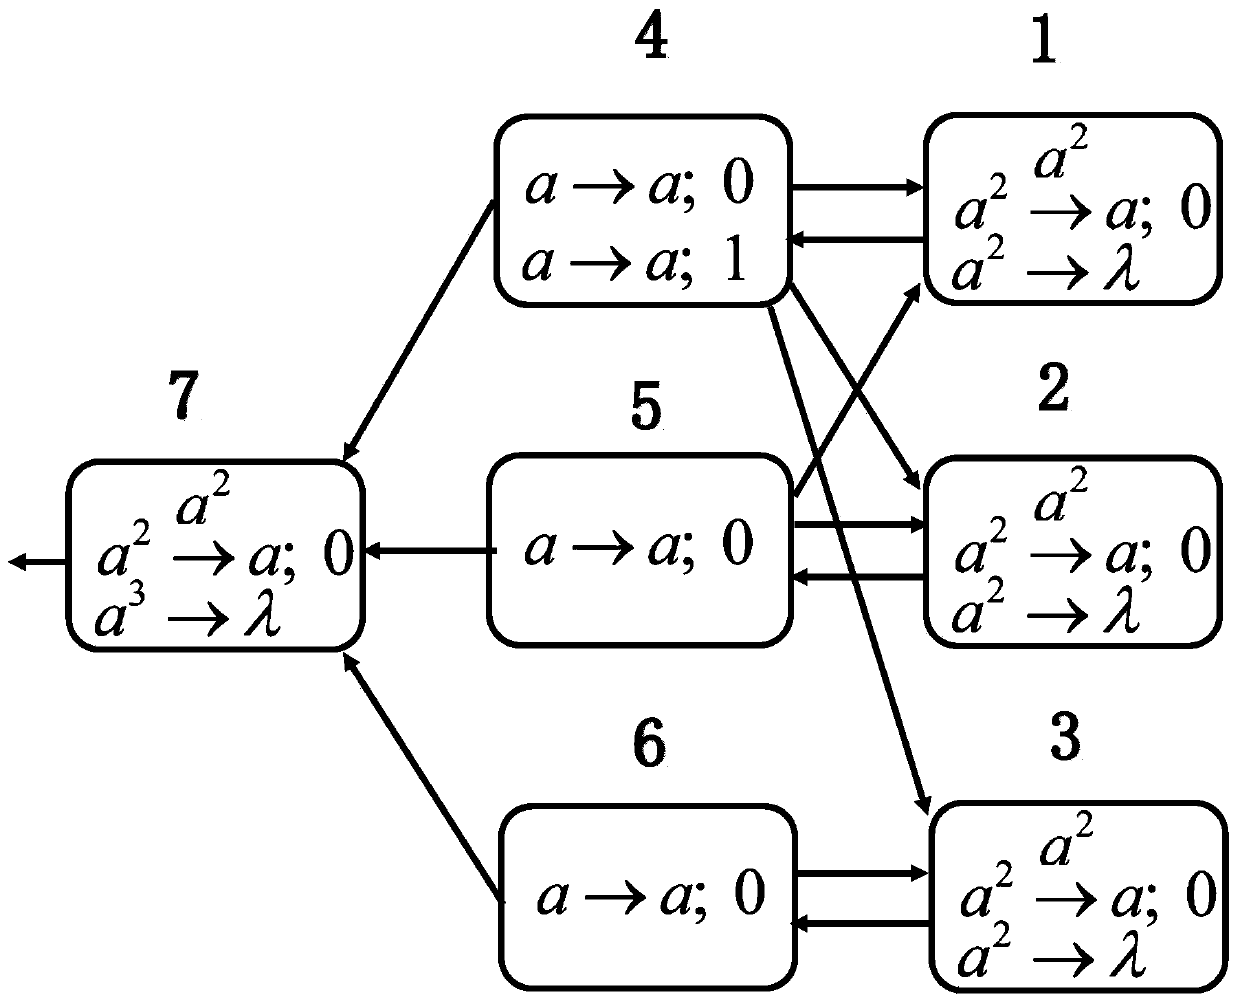 Genetic design method of spiking neural P system